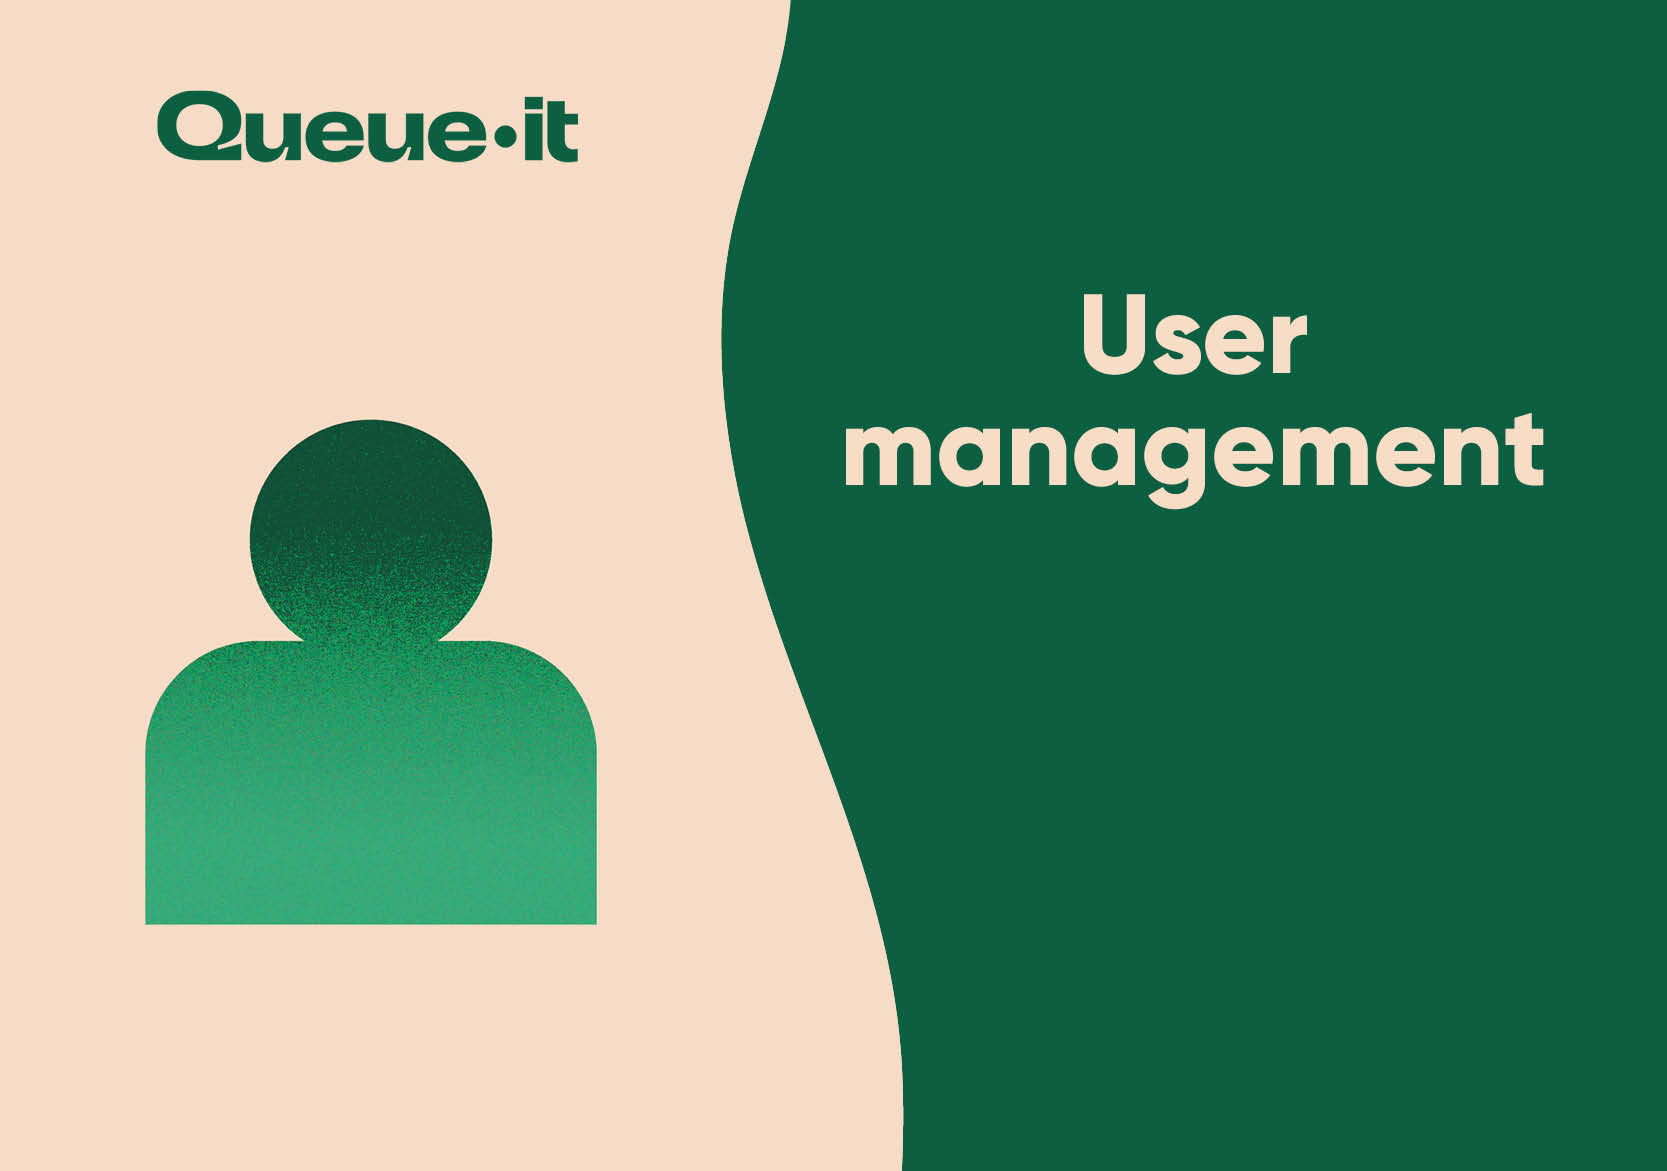 Queue-it User Management white paper